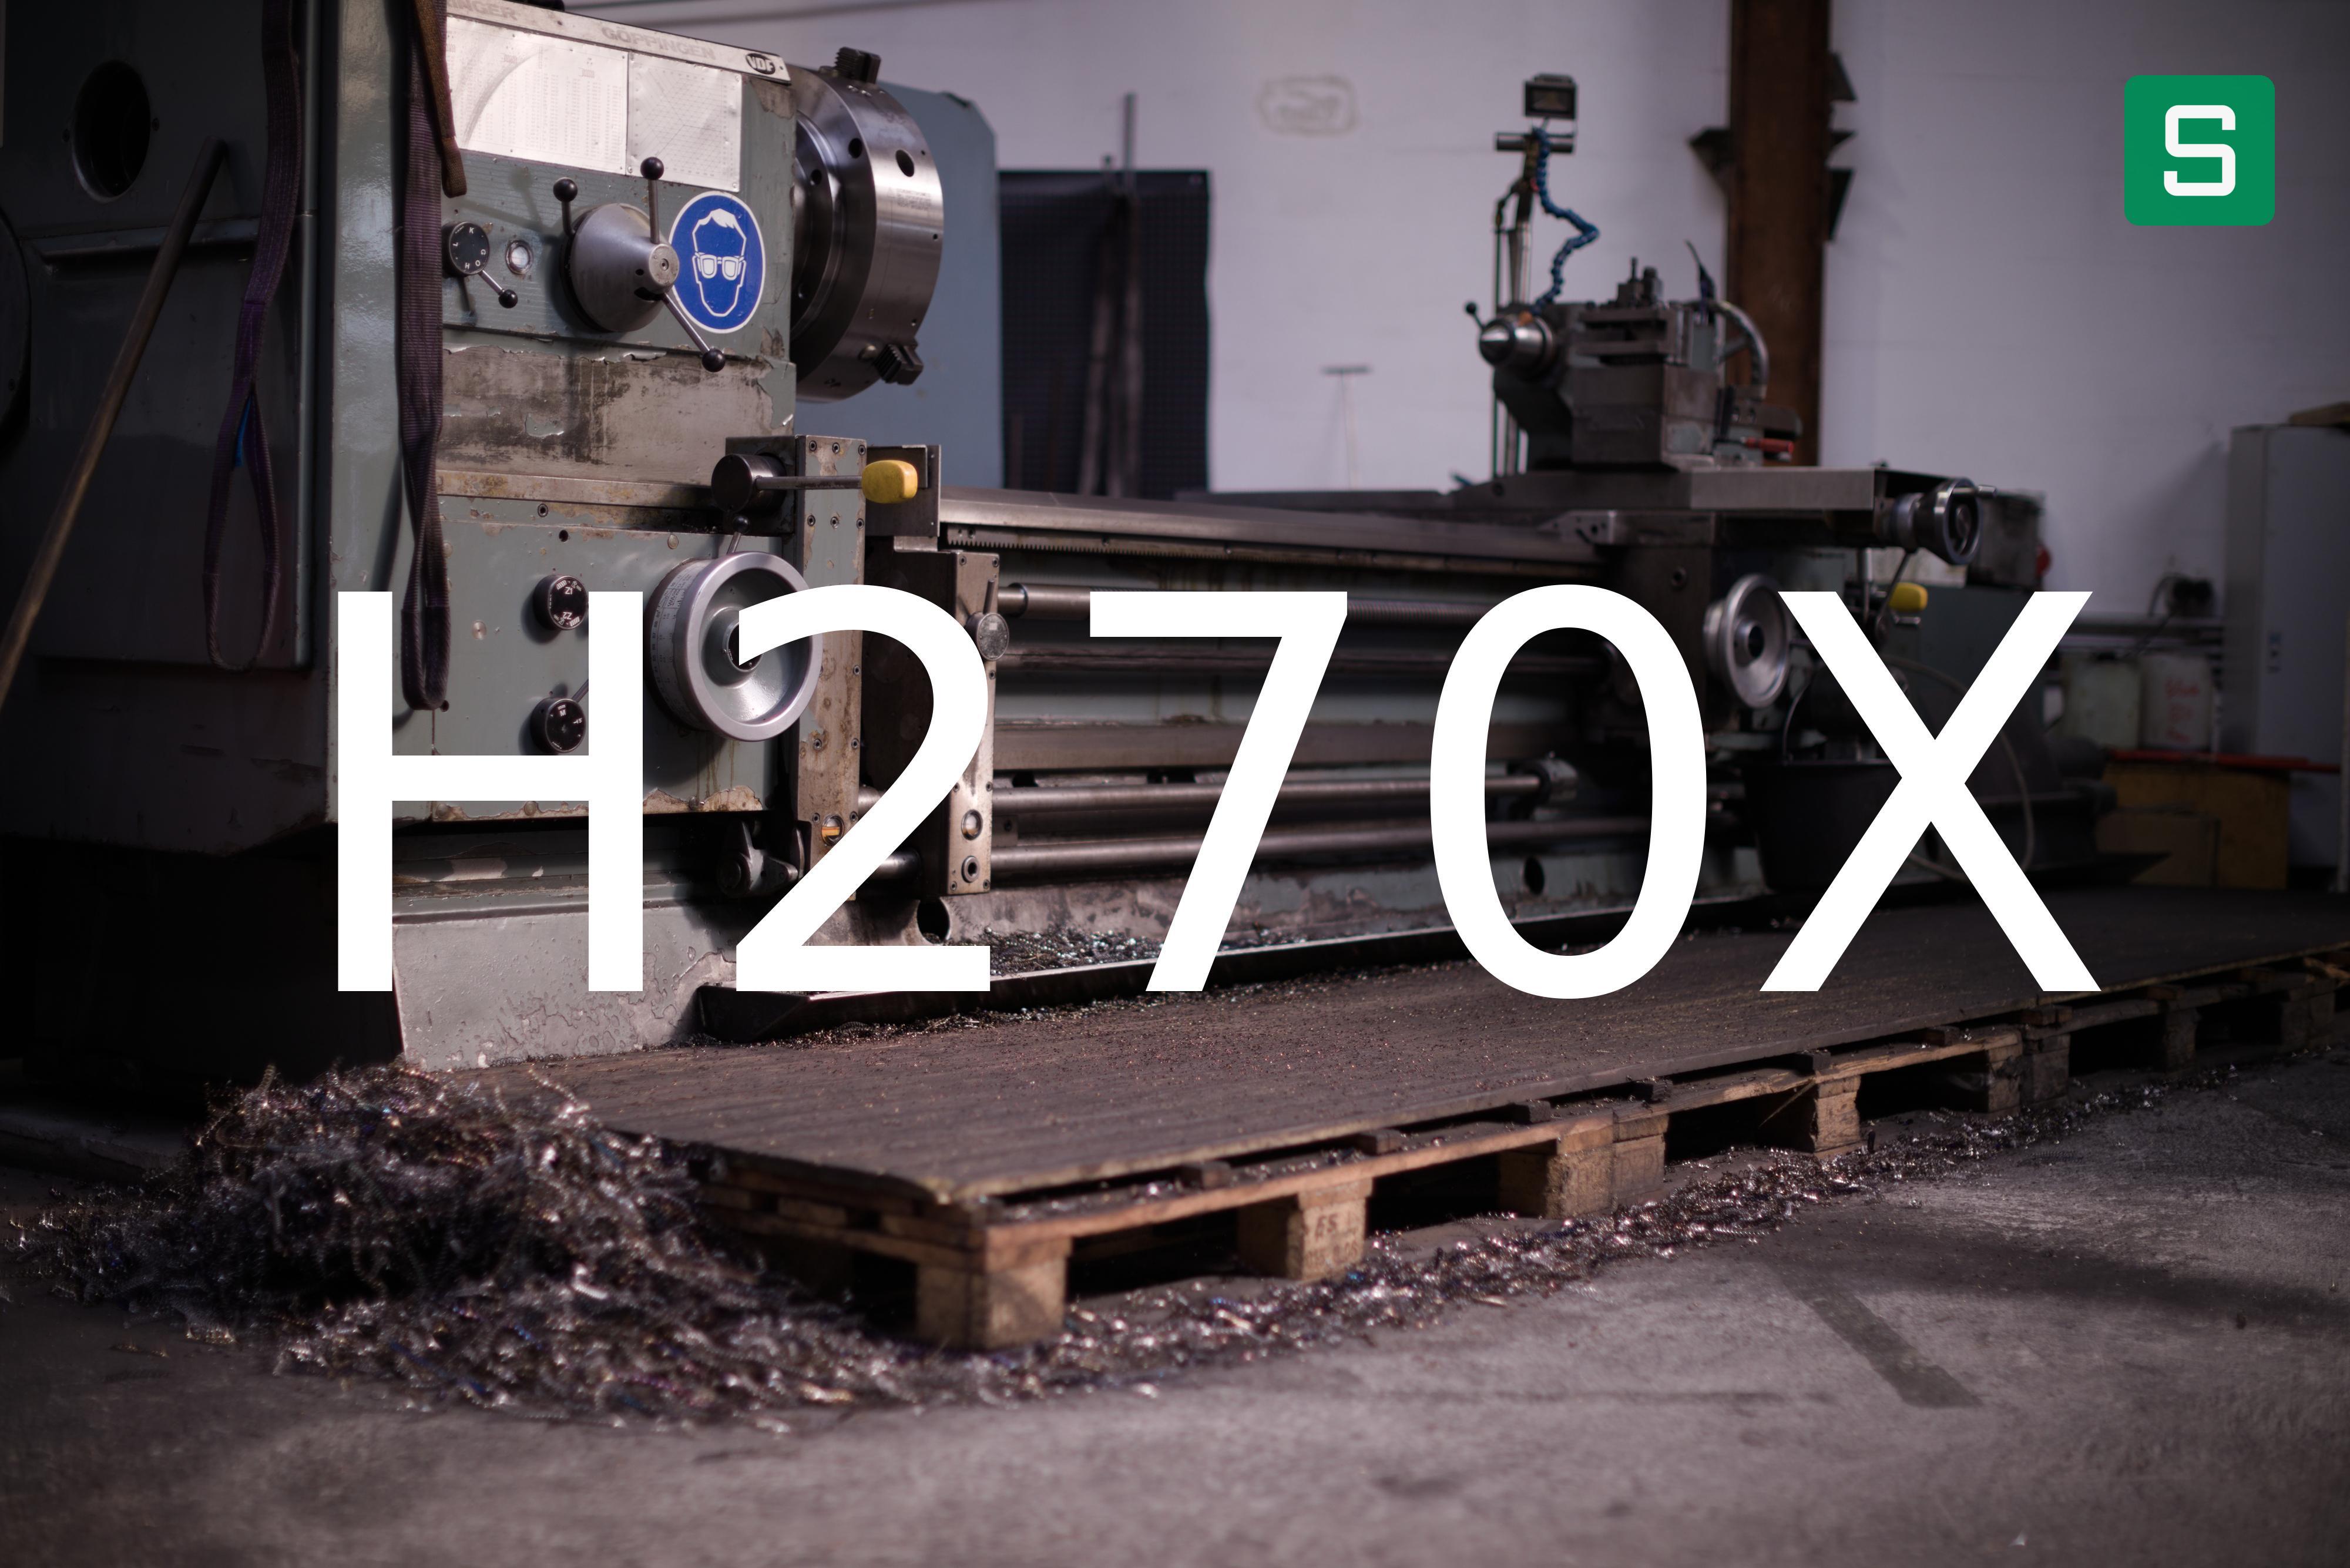 Steel Material: H270X